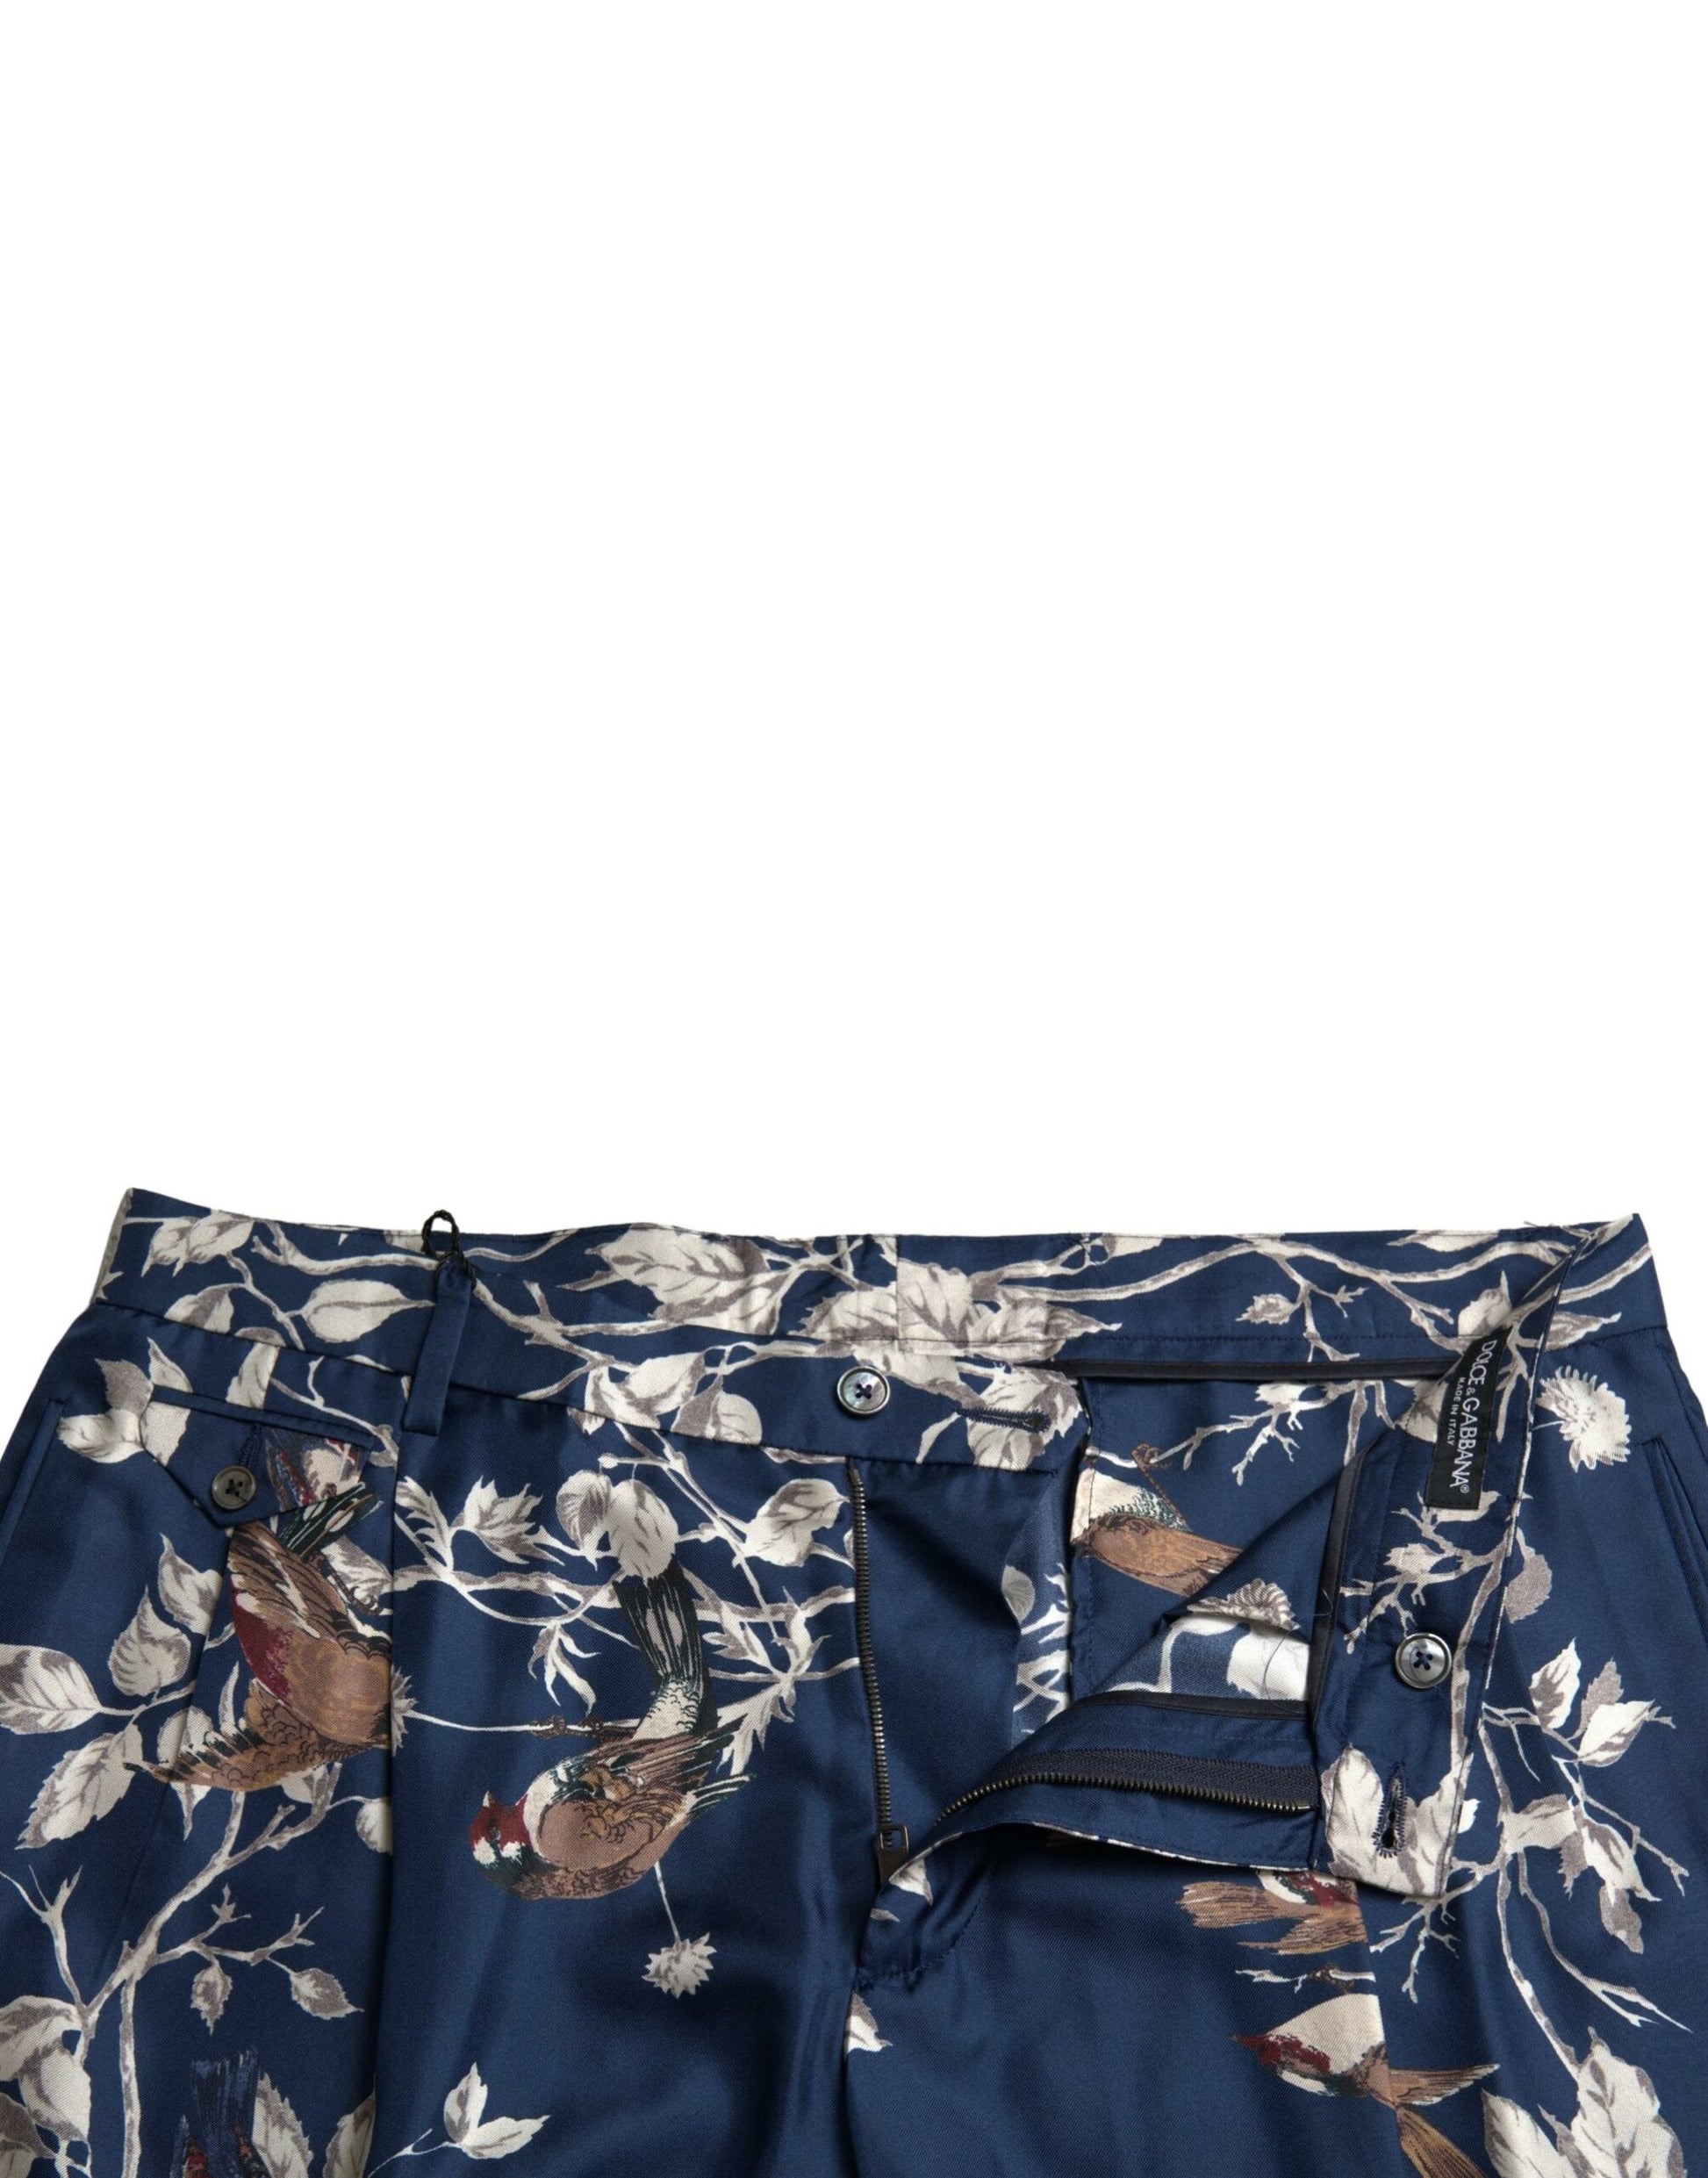 Silken Floral Bermuda Shorts in Blue